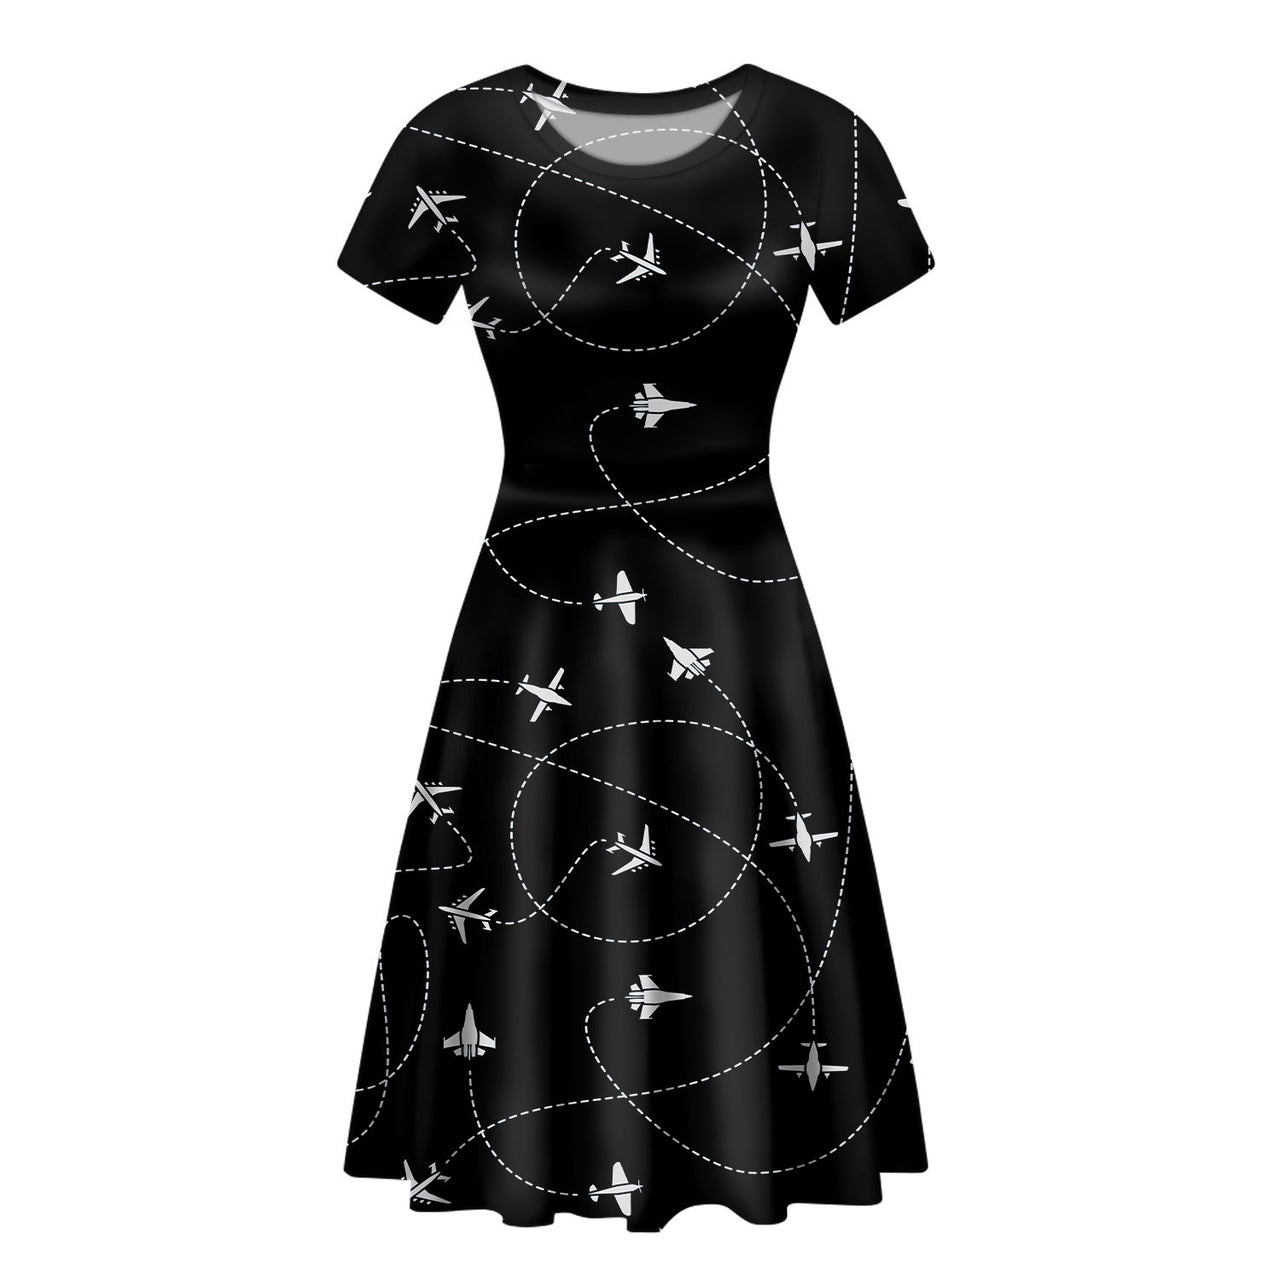 Travel The World By Plane (Black) Designed Women Midi Dress